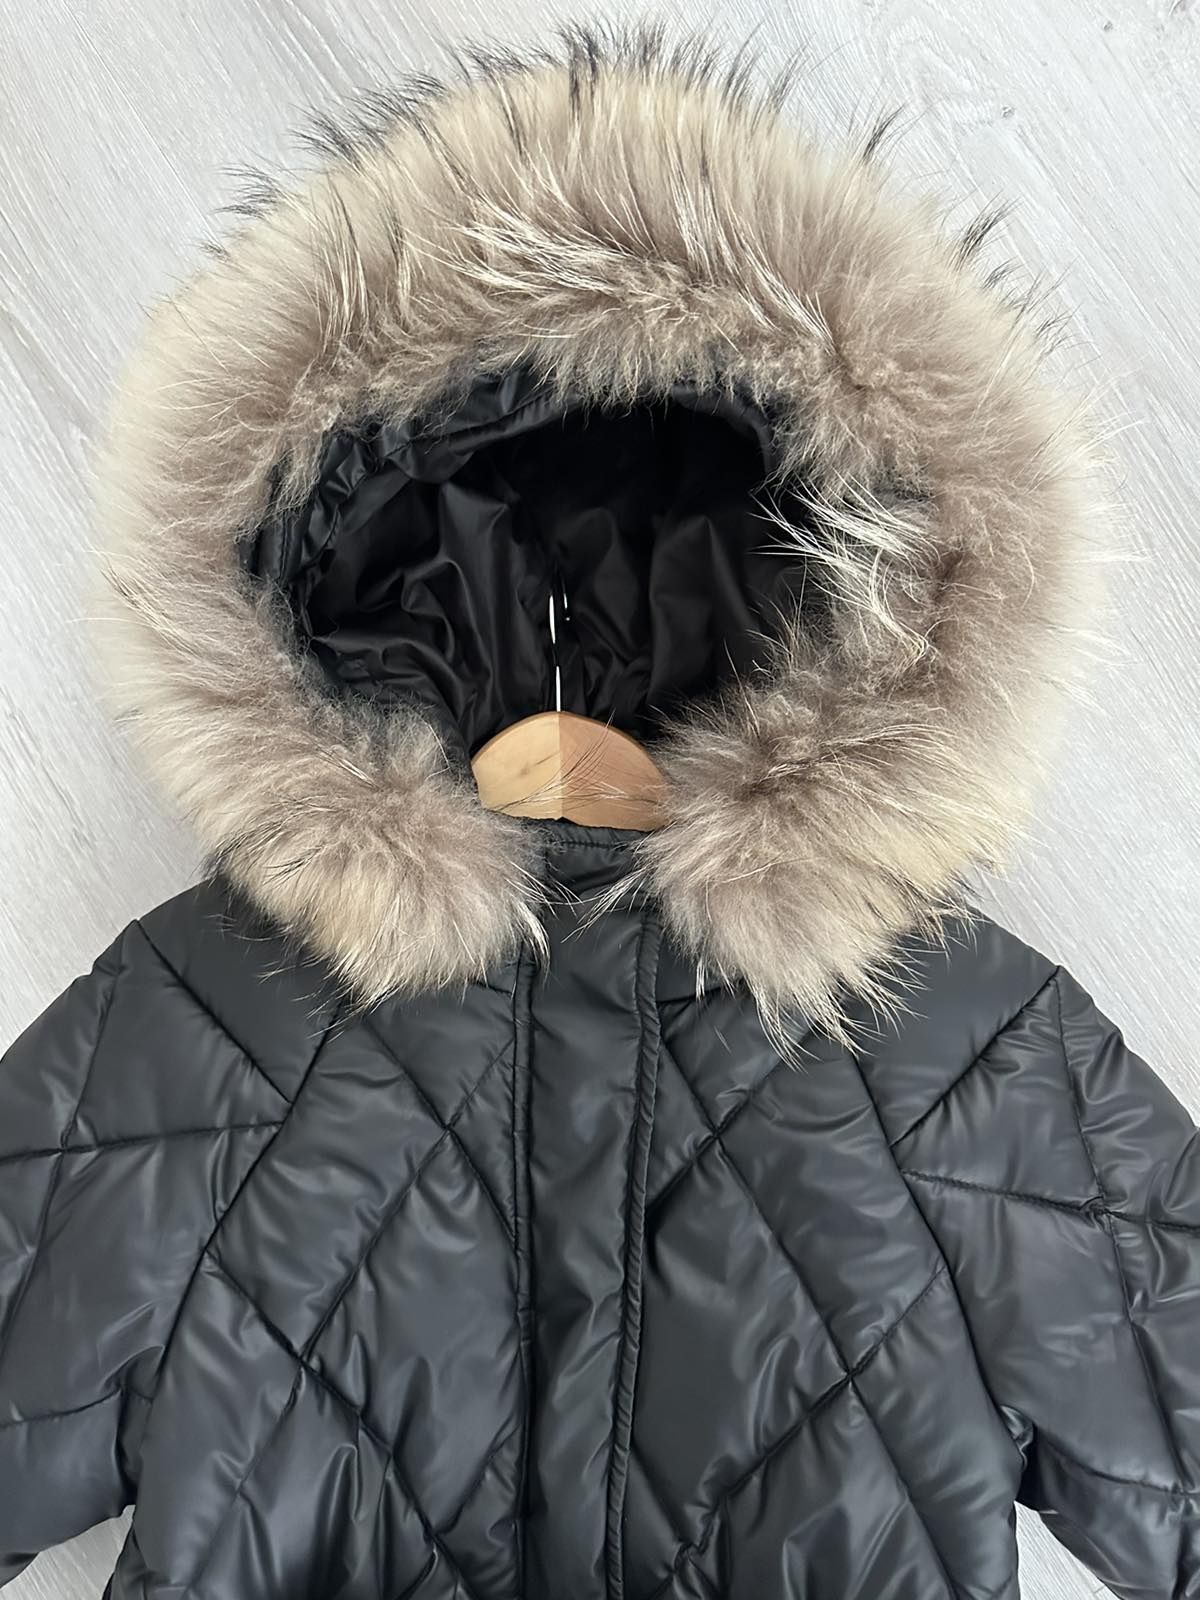 Cvetcov 134 см зимова куртка пальто